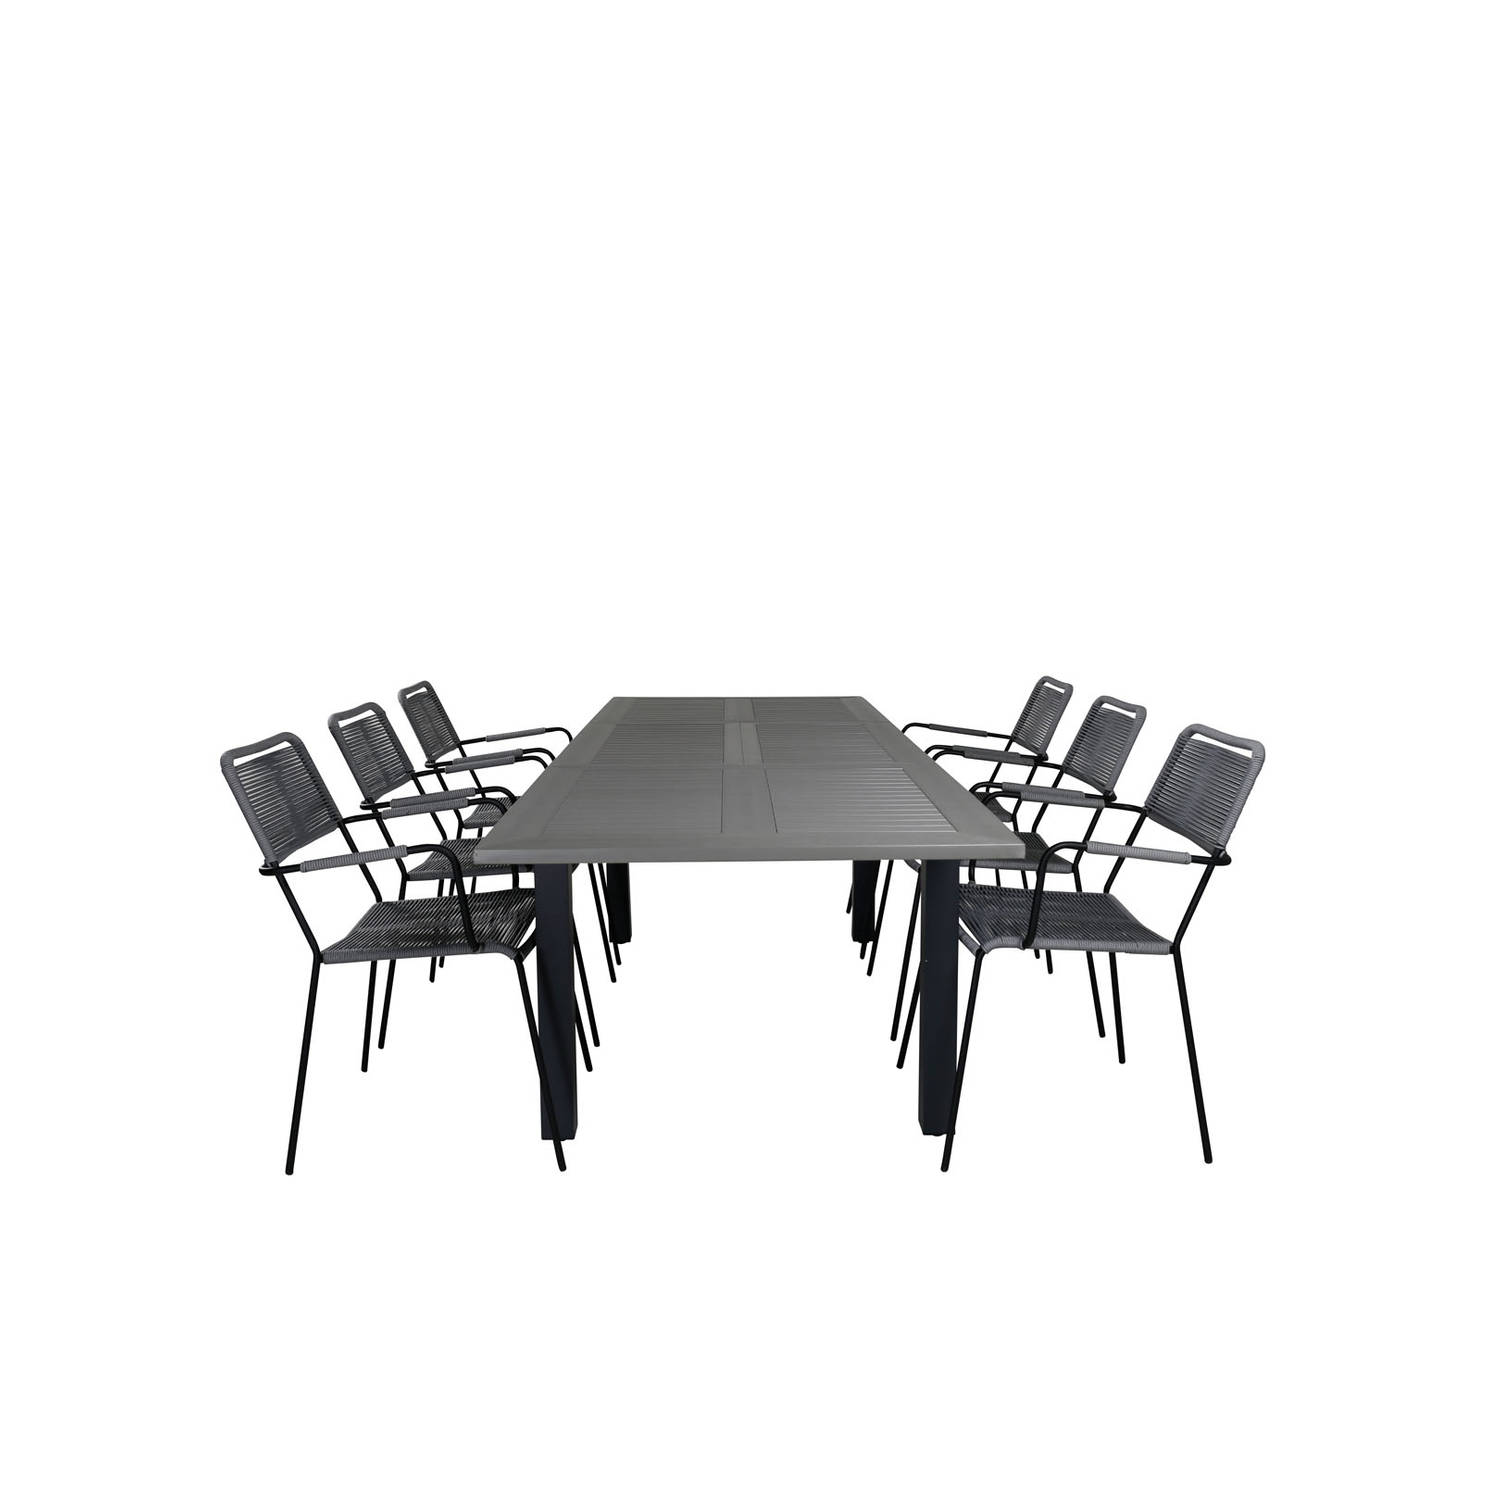 Albany tuinmeubelset tafel 100x160/240cm en 6 stoel G armleuning Lindos zwart, grijs.